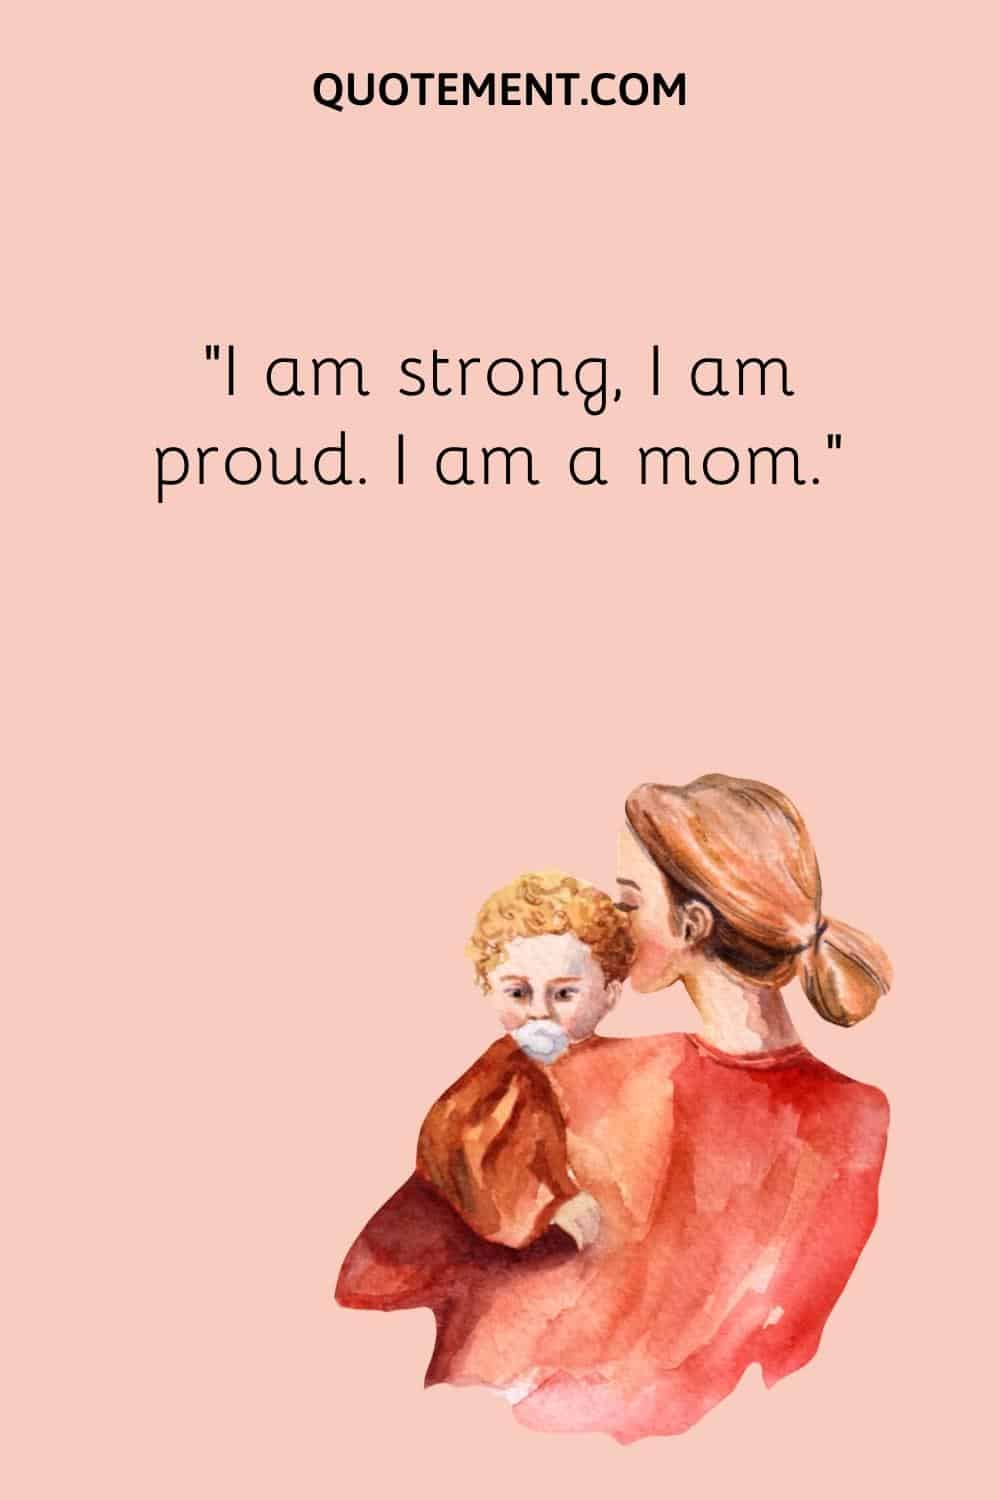 “I am strong, I am proud. I am a mom.”